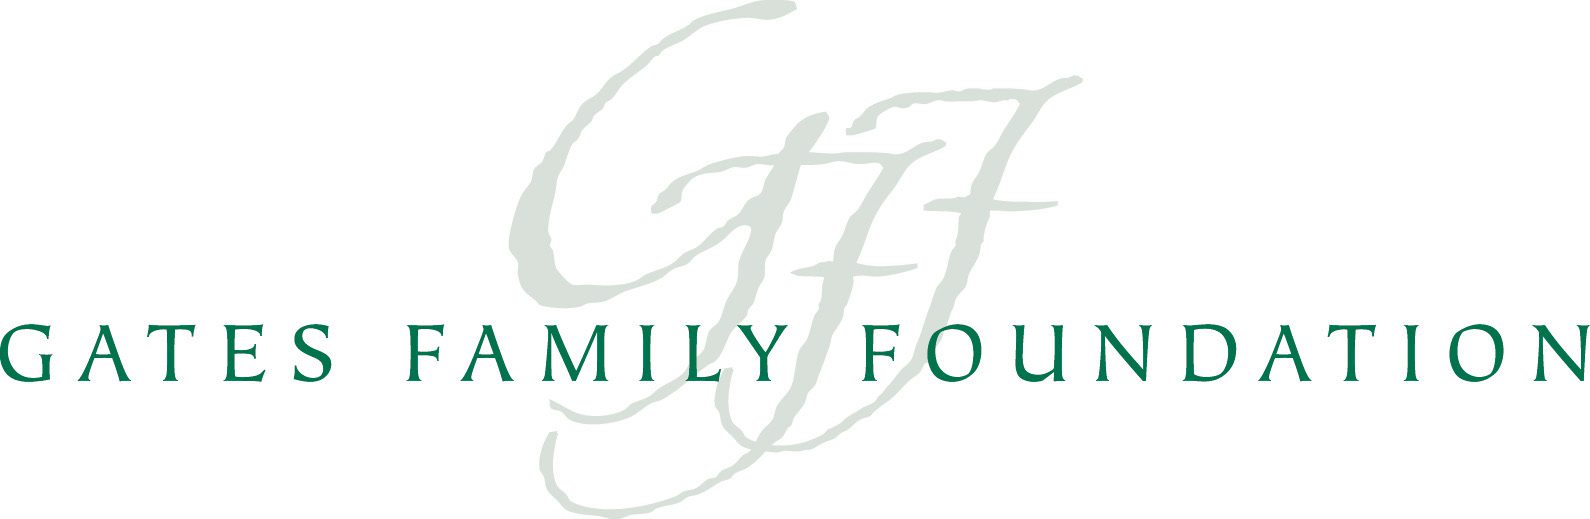 http://www.gatesfamilyfoundation.org